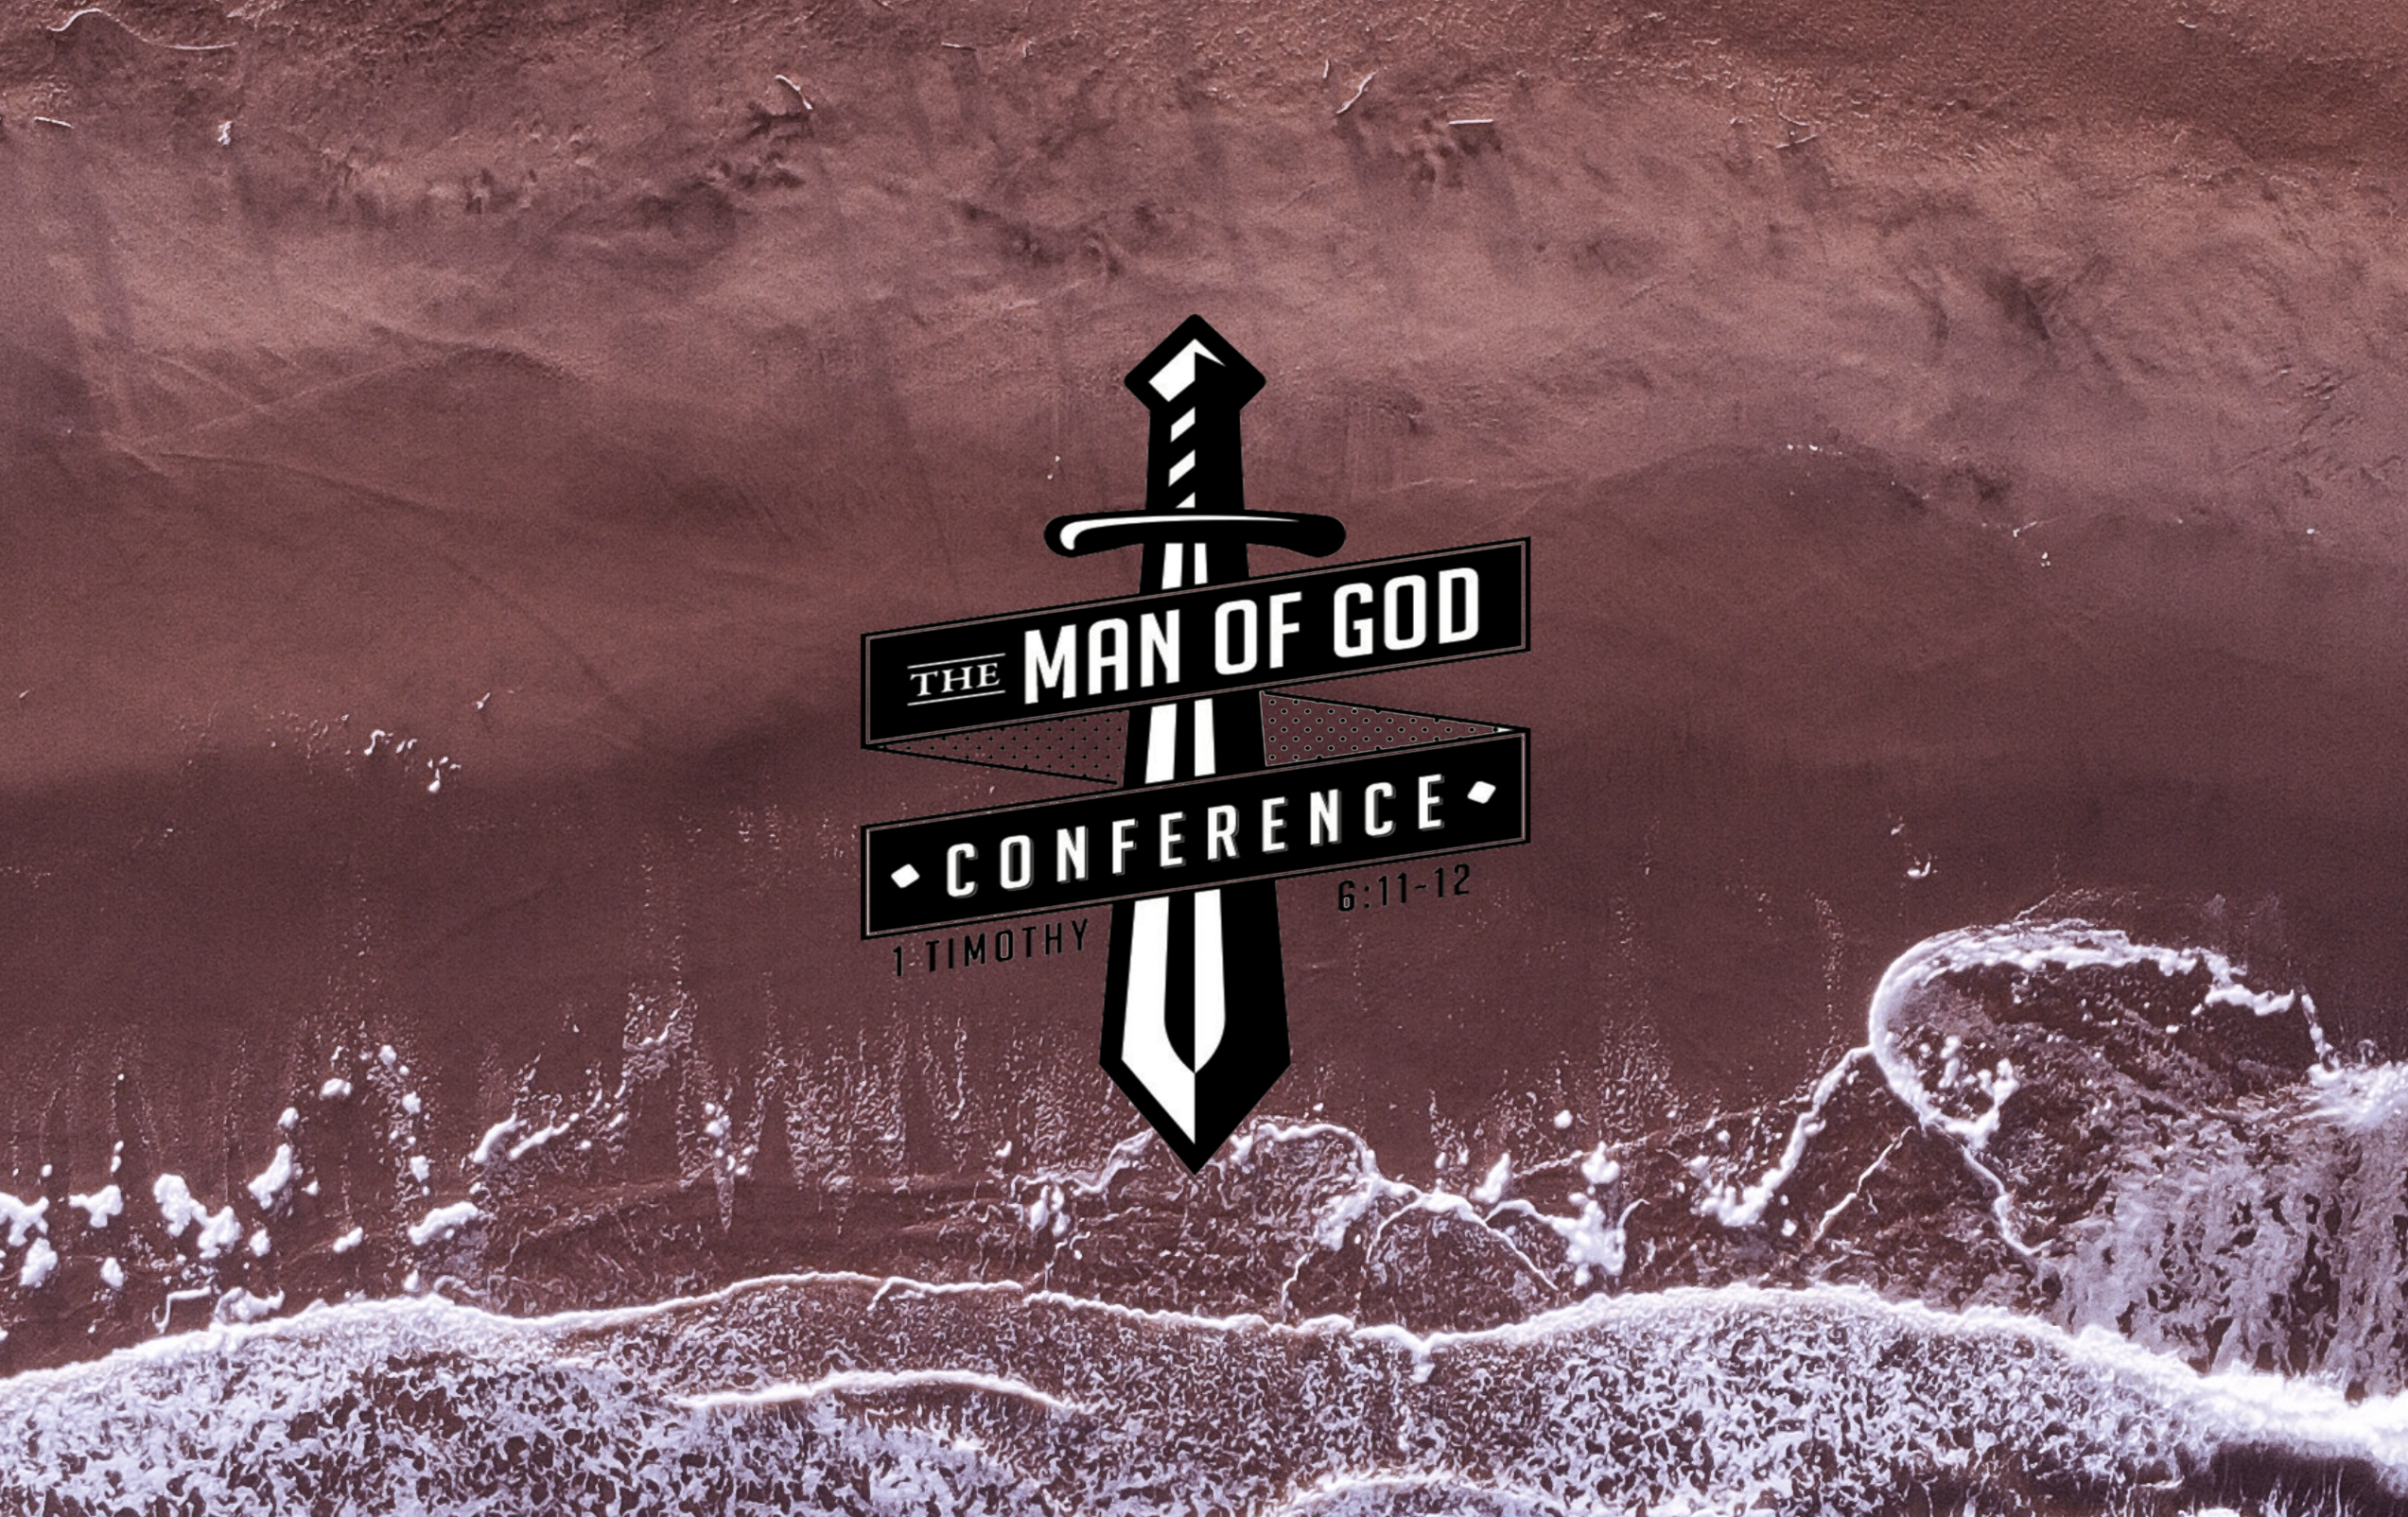 Man of God Conference 2020 image